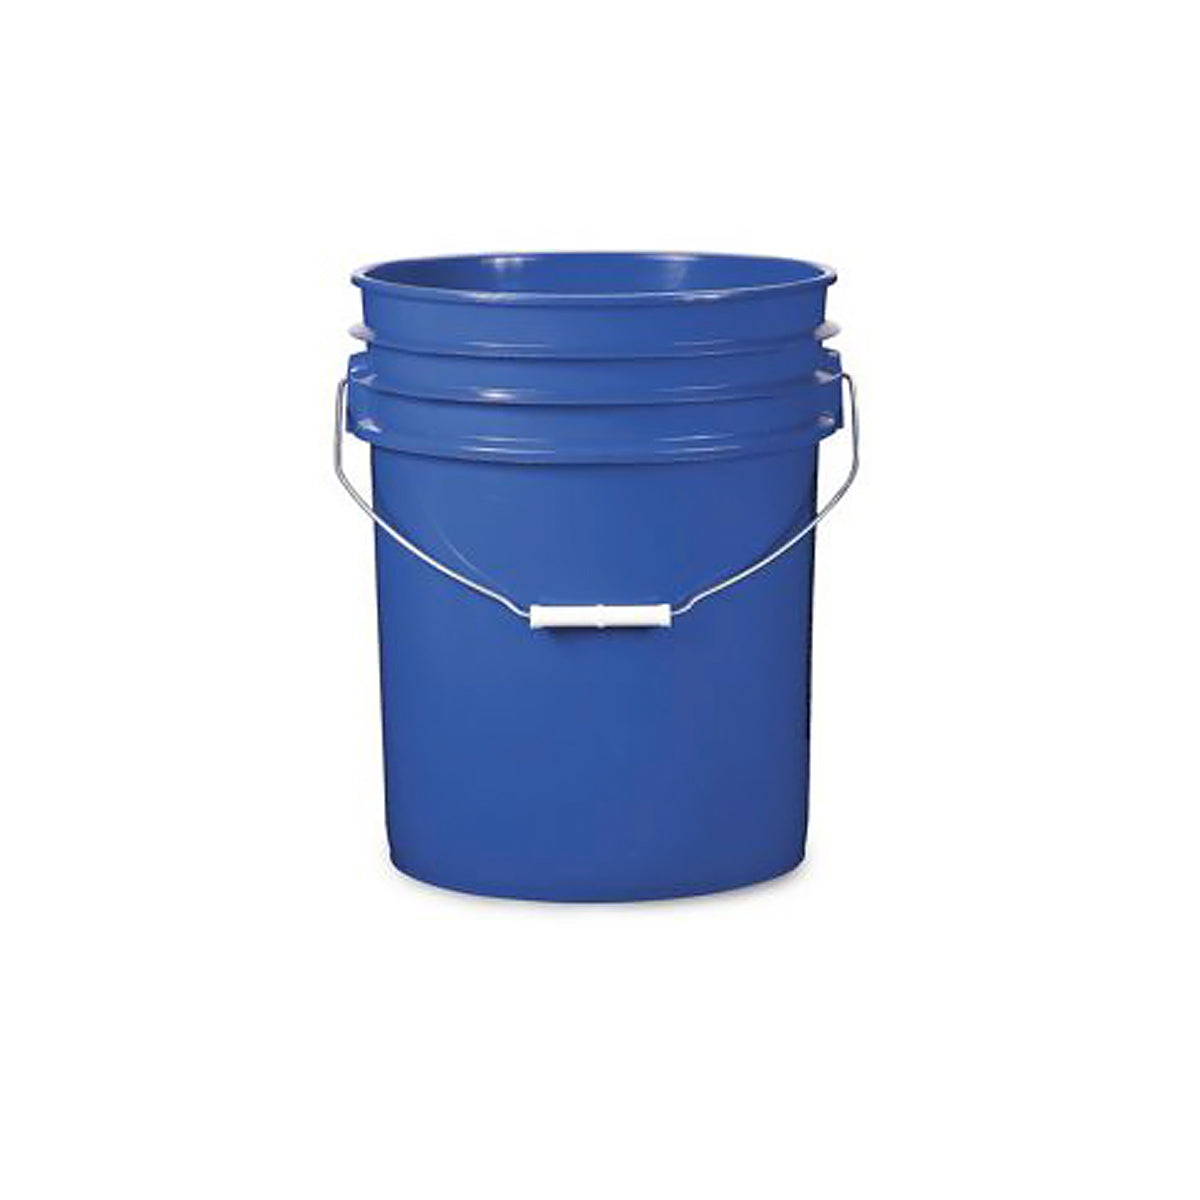 5 Gallon Bucket With Repair Kit